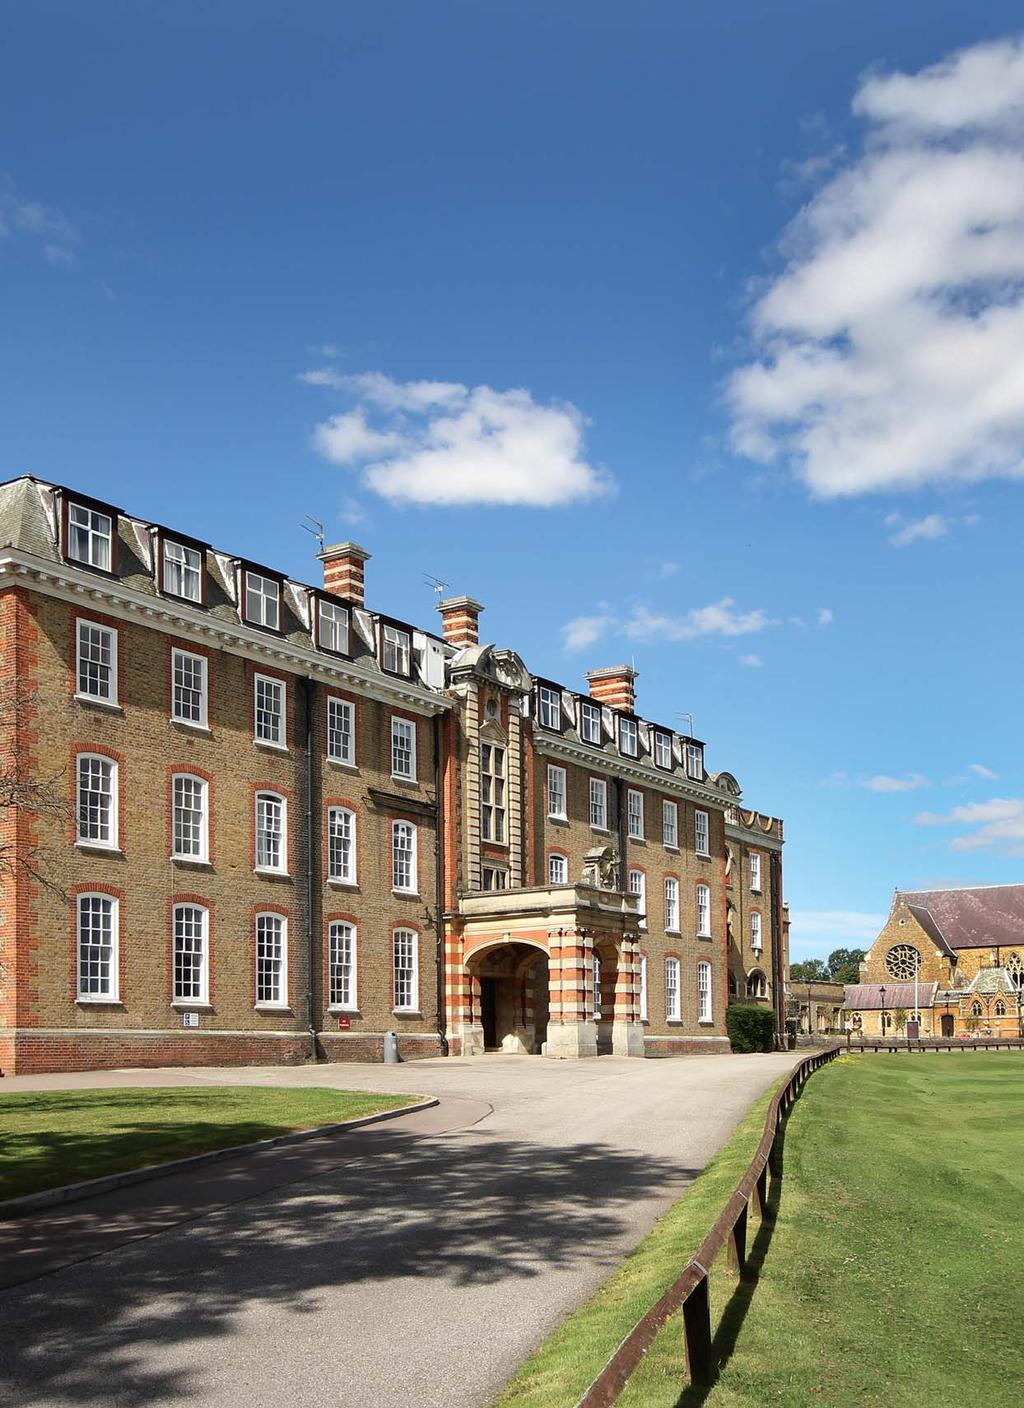 St Edmund's College, ngiltere'nin en eski